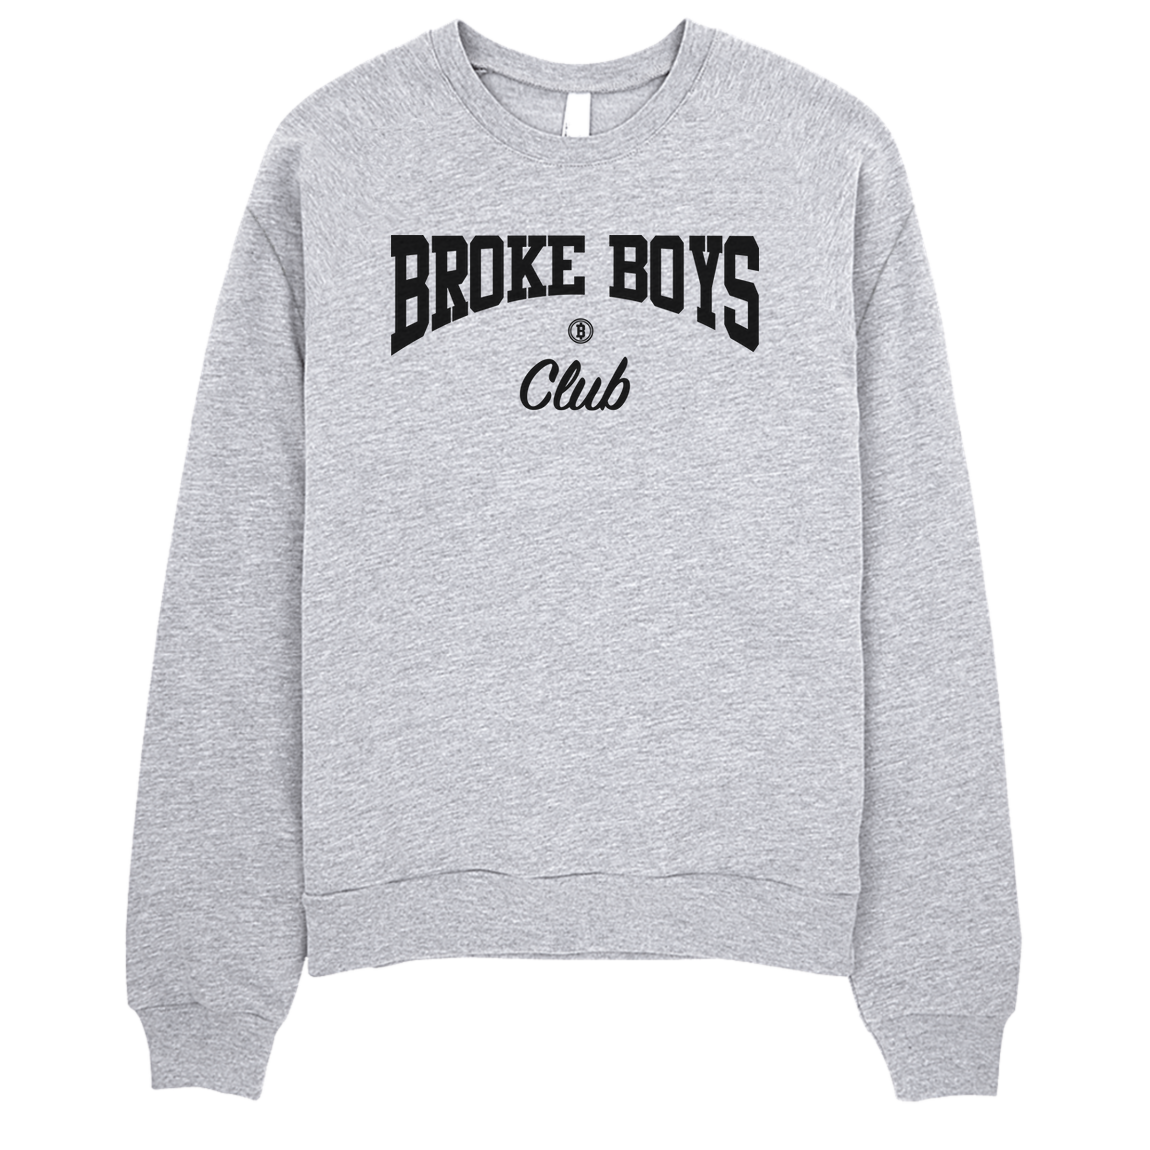 Broke Boys Club | Crewneck Sweatshirt OniTakai